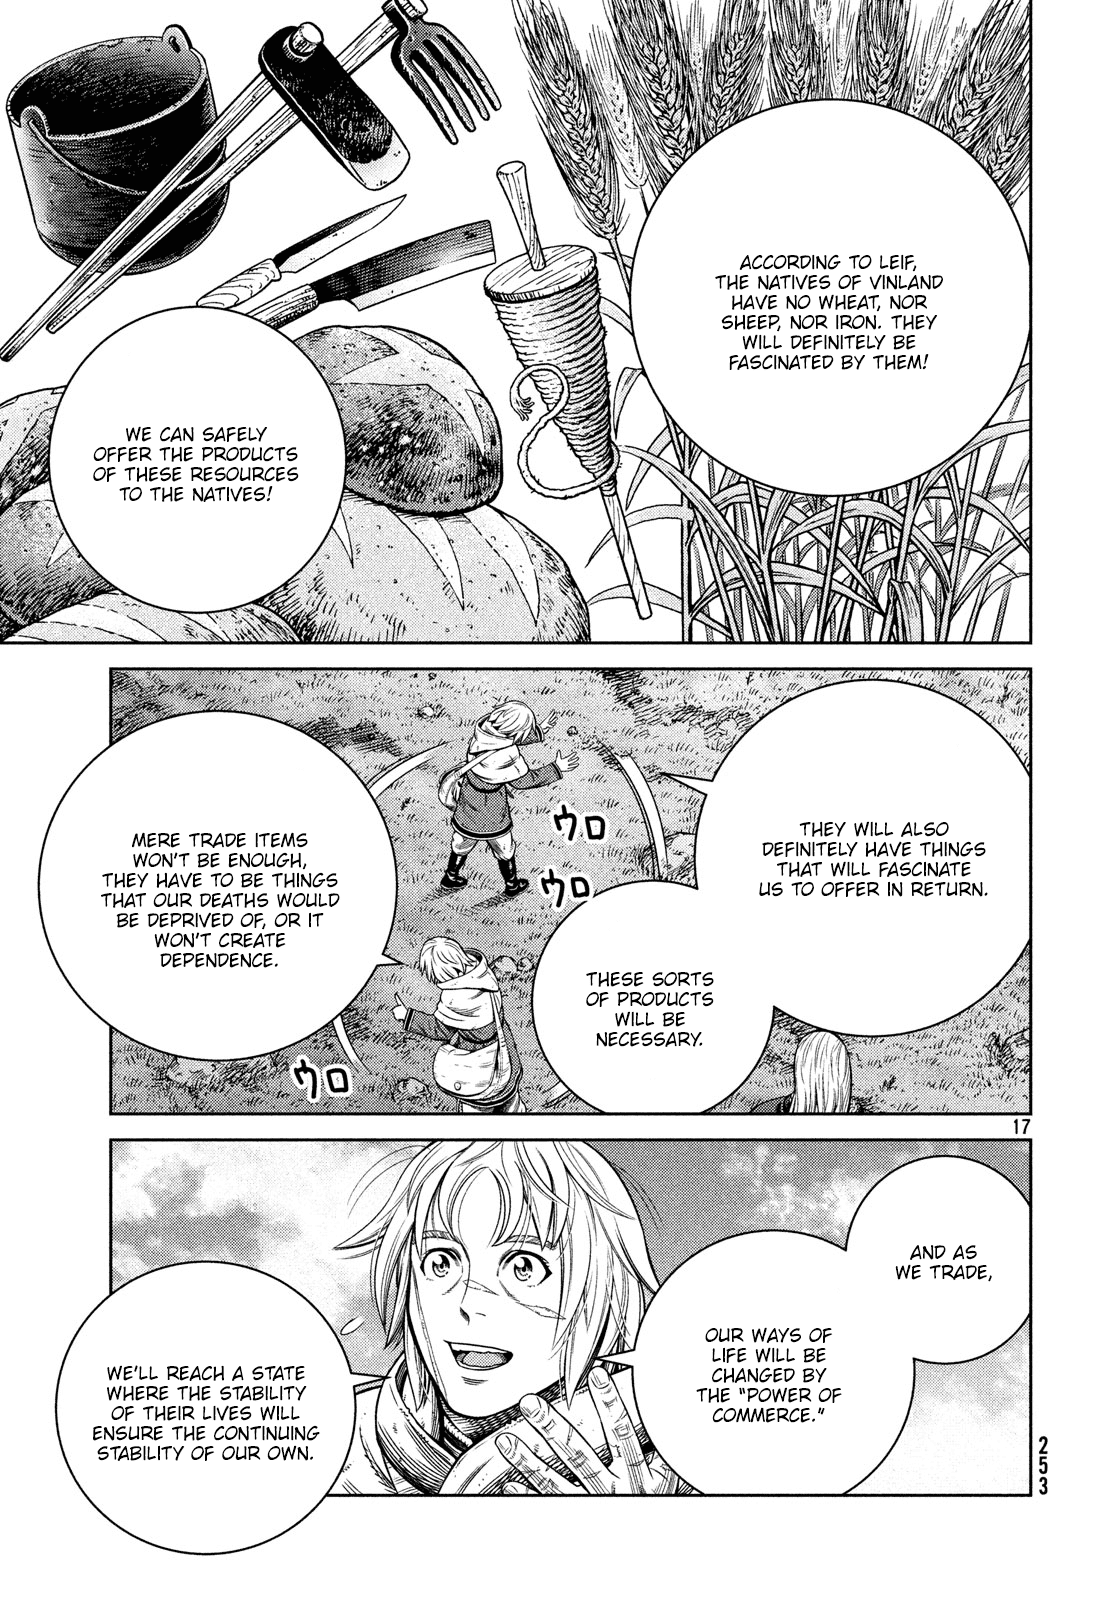 Vinland Saga Manga Manga Chapter - 173 - image 18